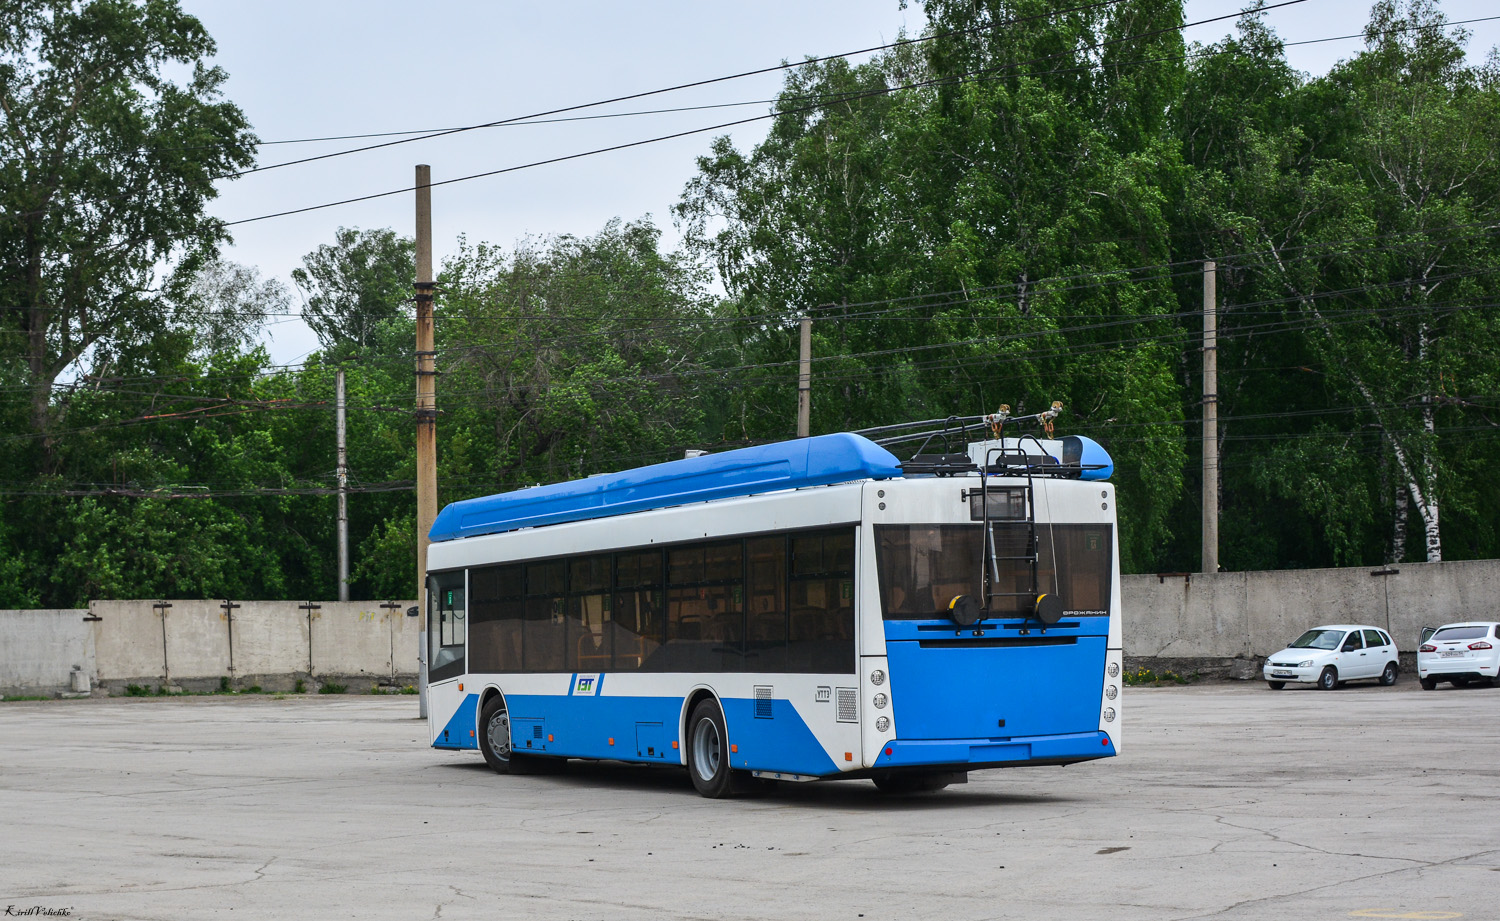 Новосибирск, УТТЗ-6241.01 «Горожанин» № 4502; Новосибирск — Новые троллейбусы